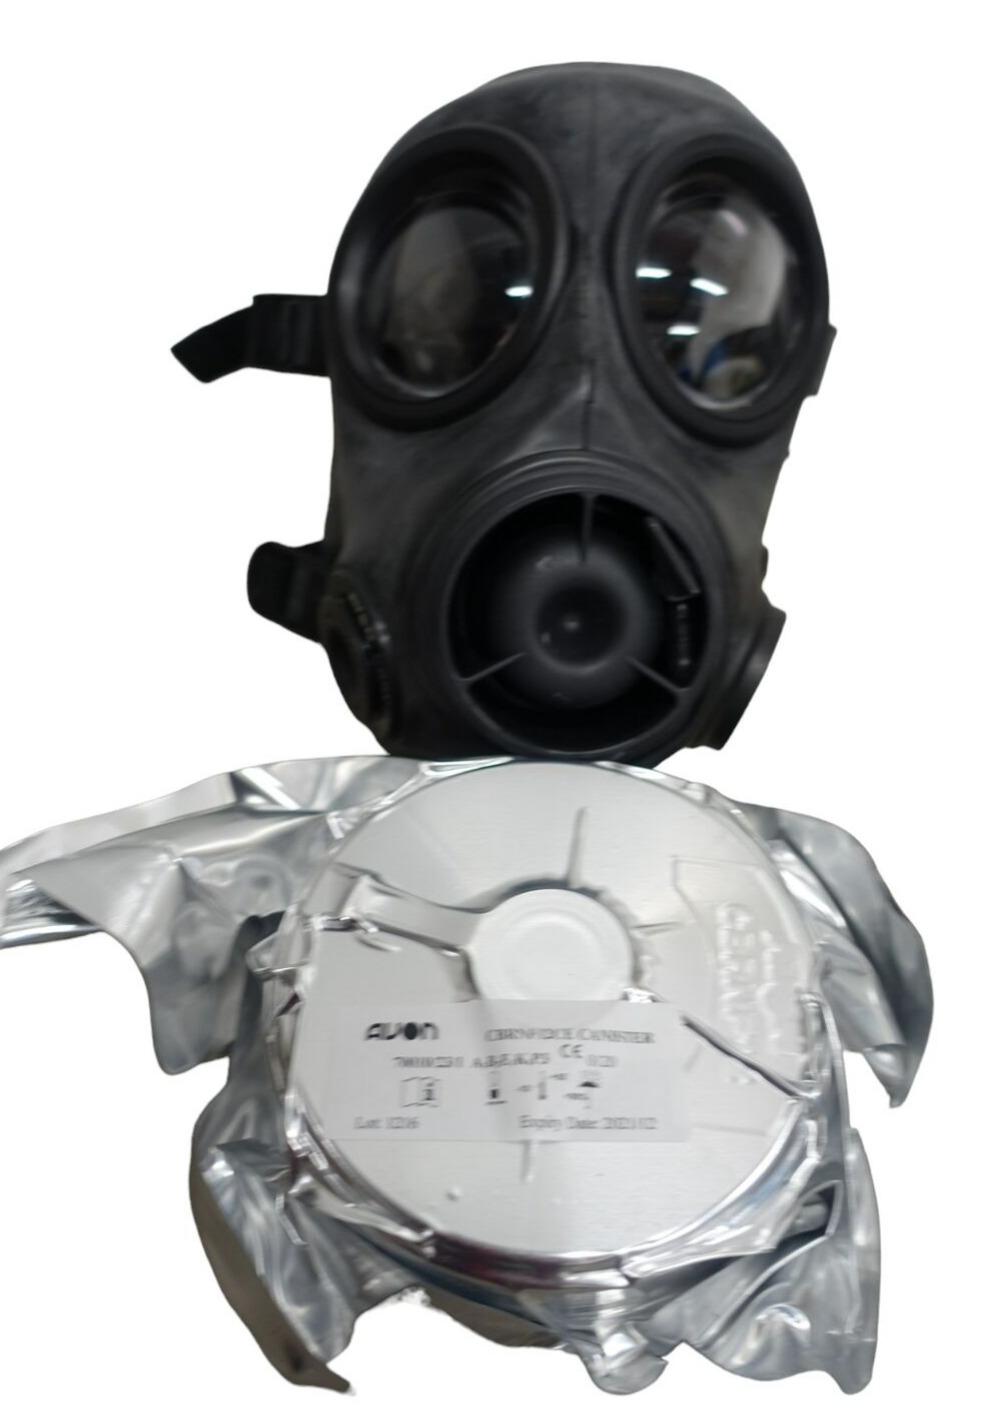 Avon FM12 Respirator Mask Sizes 1, 2, 3 Mask and Avon F12CE Filter (2021)